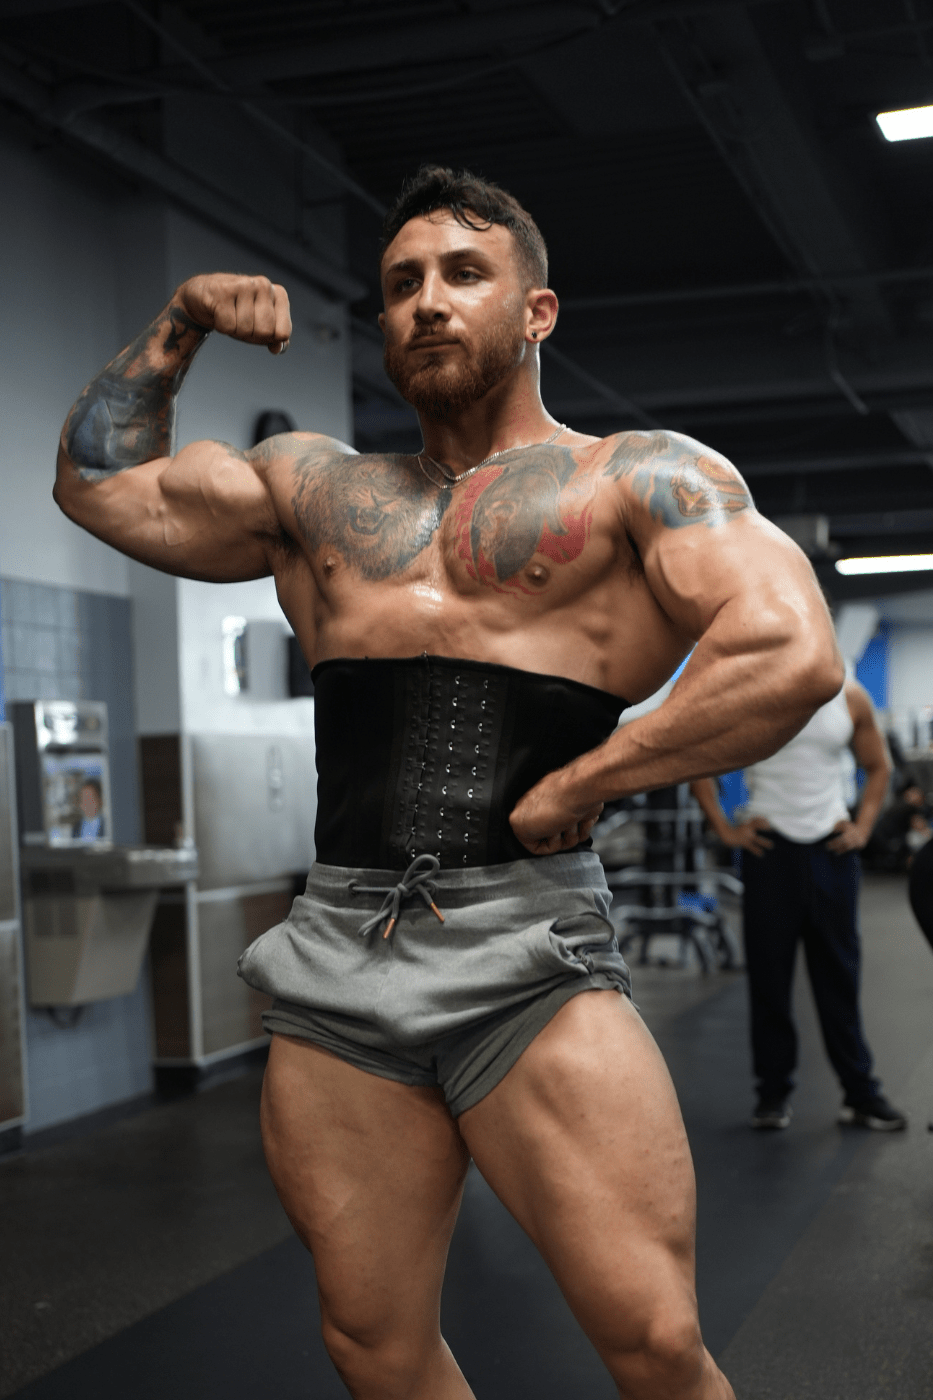 Belly Button Shaper - Waist Trainer for Men